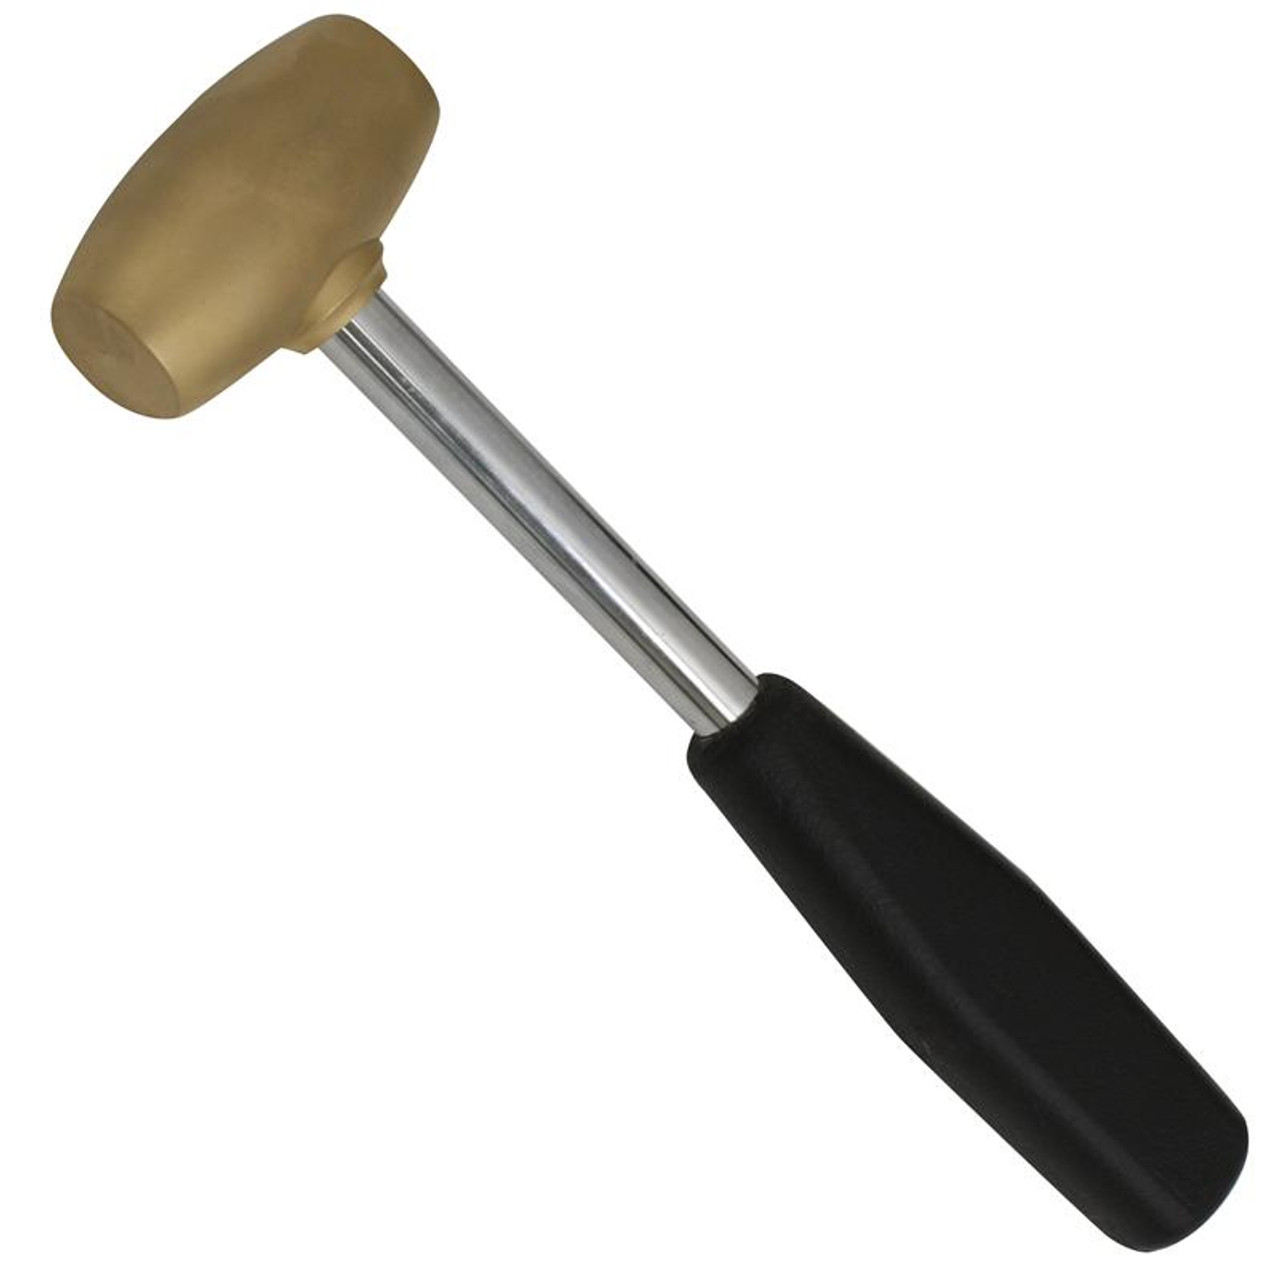 Eurotool Brass Hammer, 1 Pound